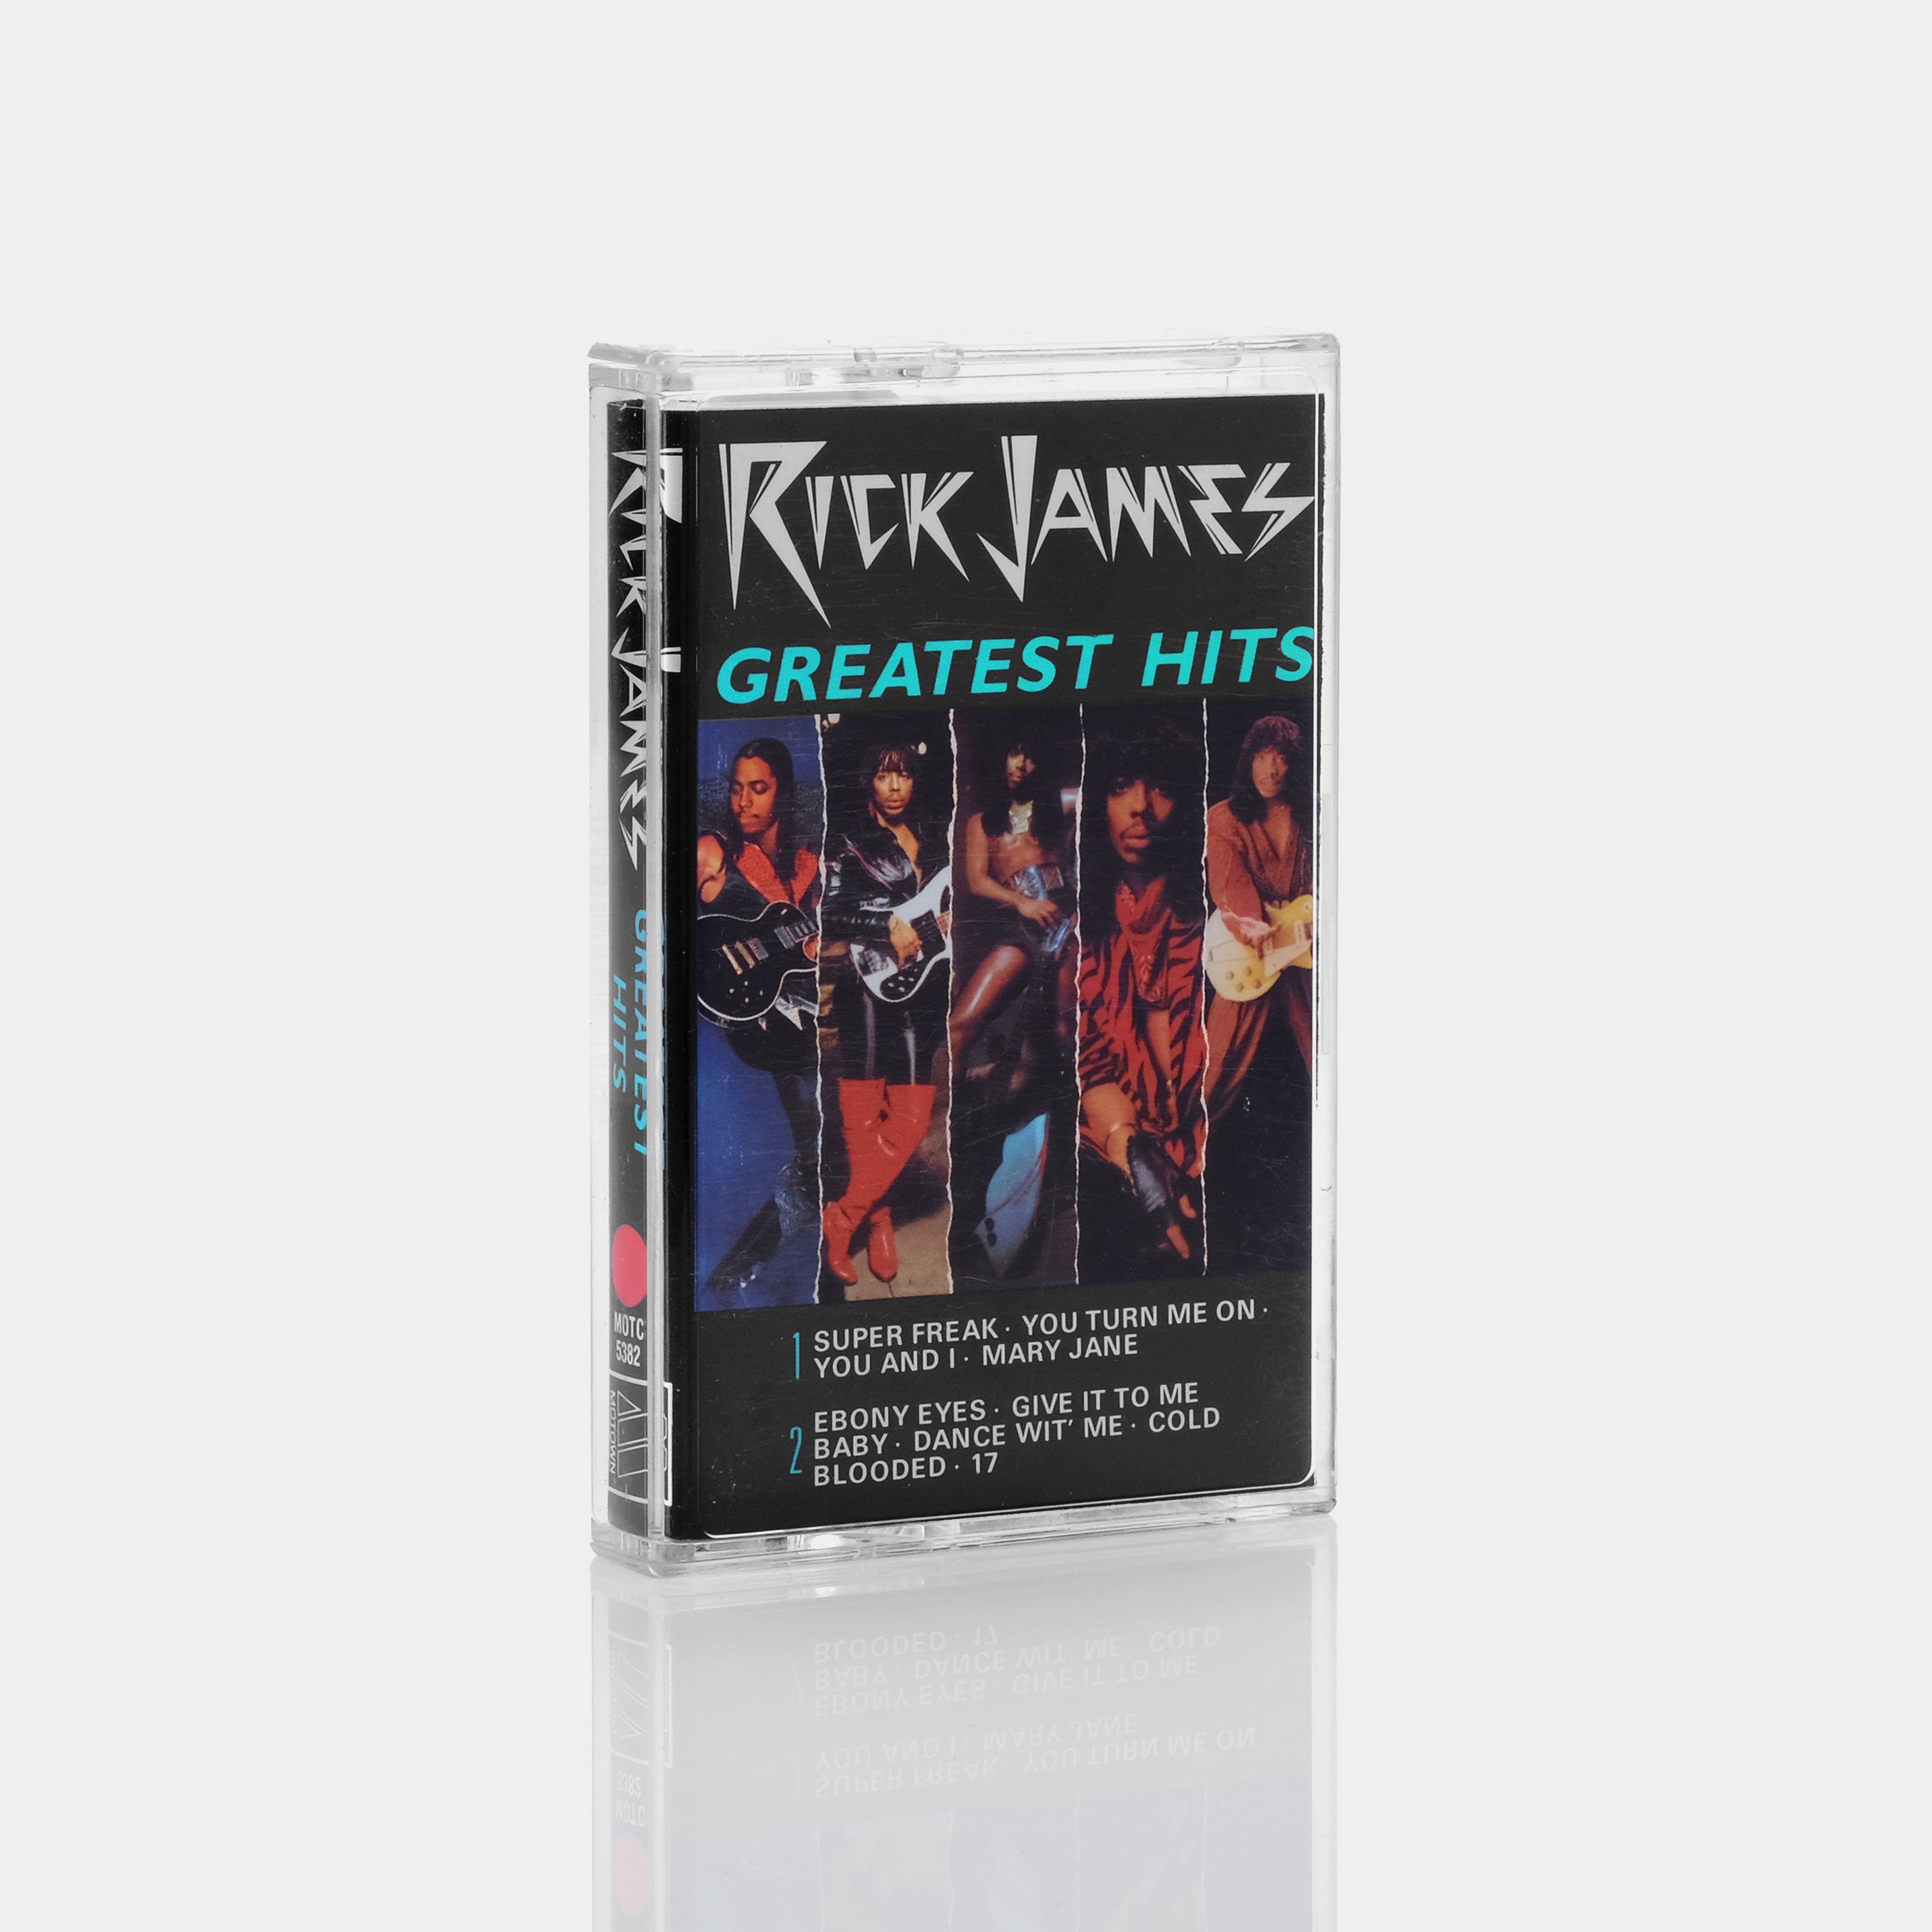 Rick James - Greatest Hits Cassette Tape